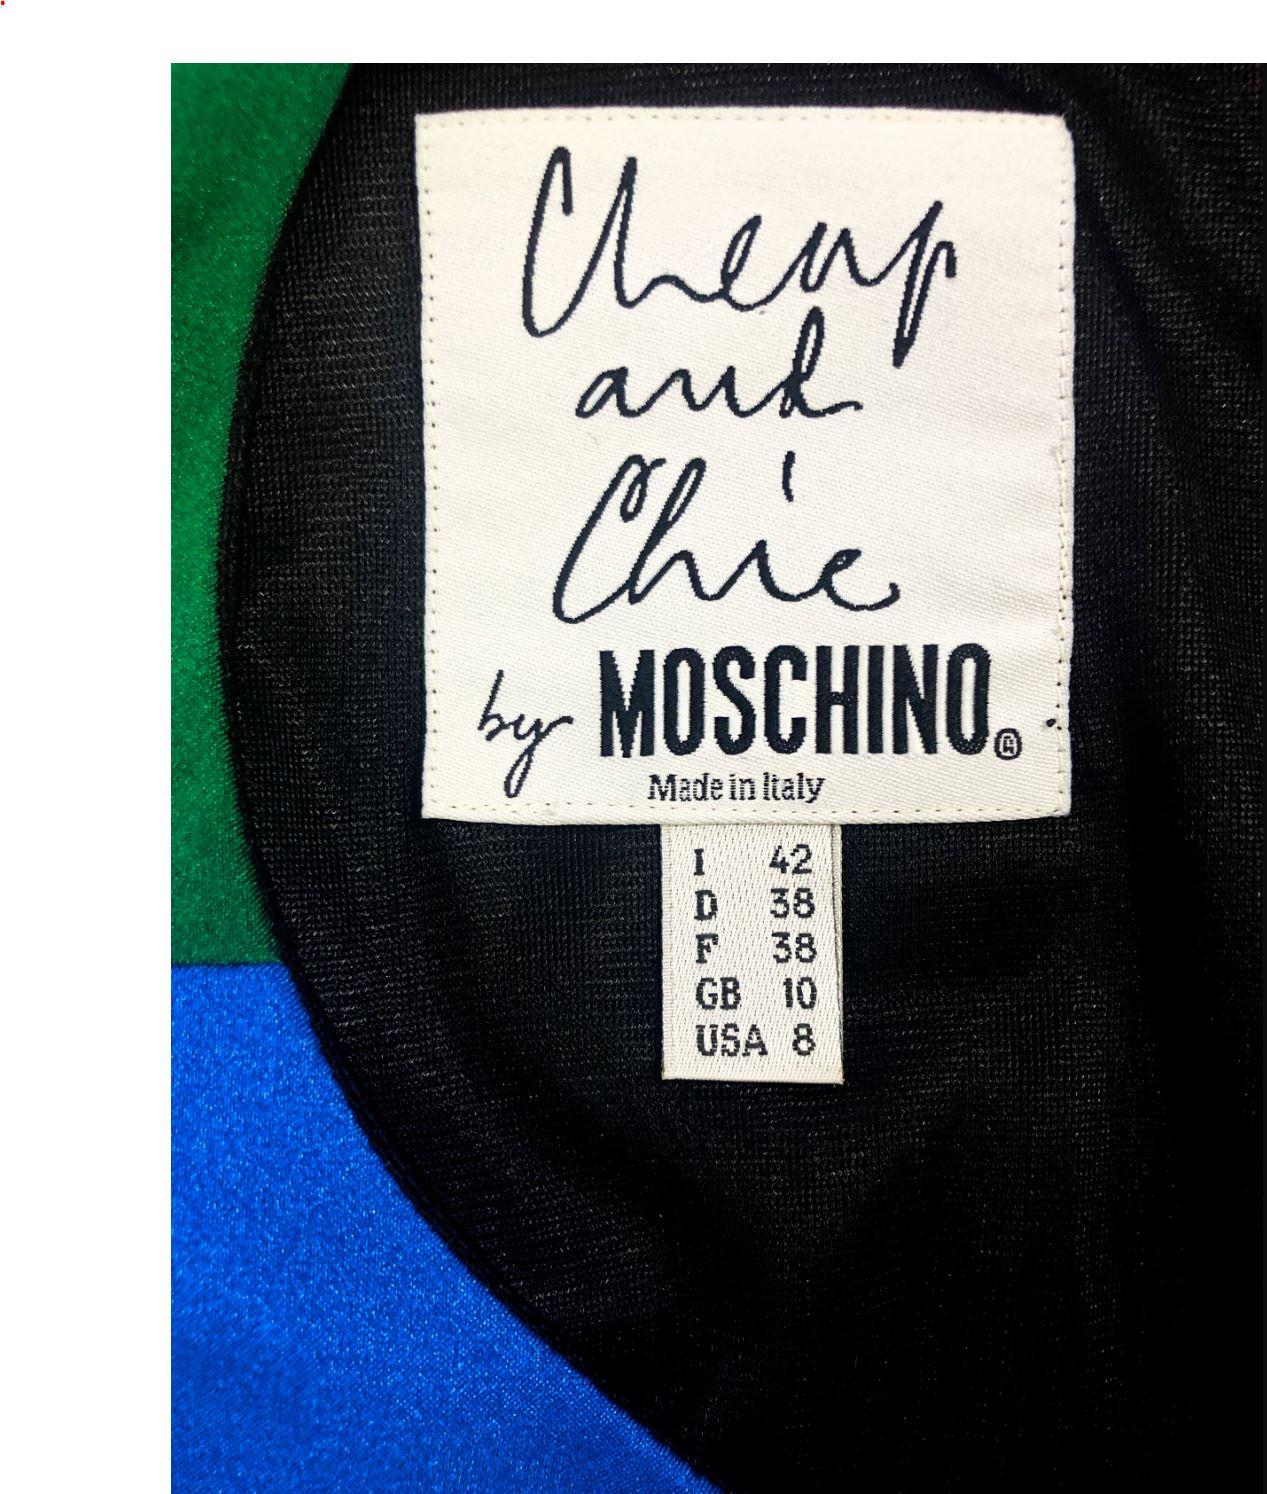 Moschino Colour Block Rainbow Fran Drescher Nanny Series Couture Medium Dress For Sale 2